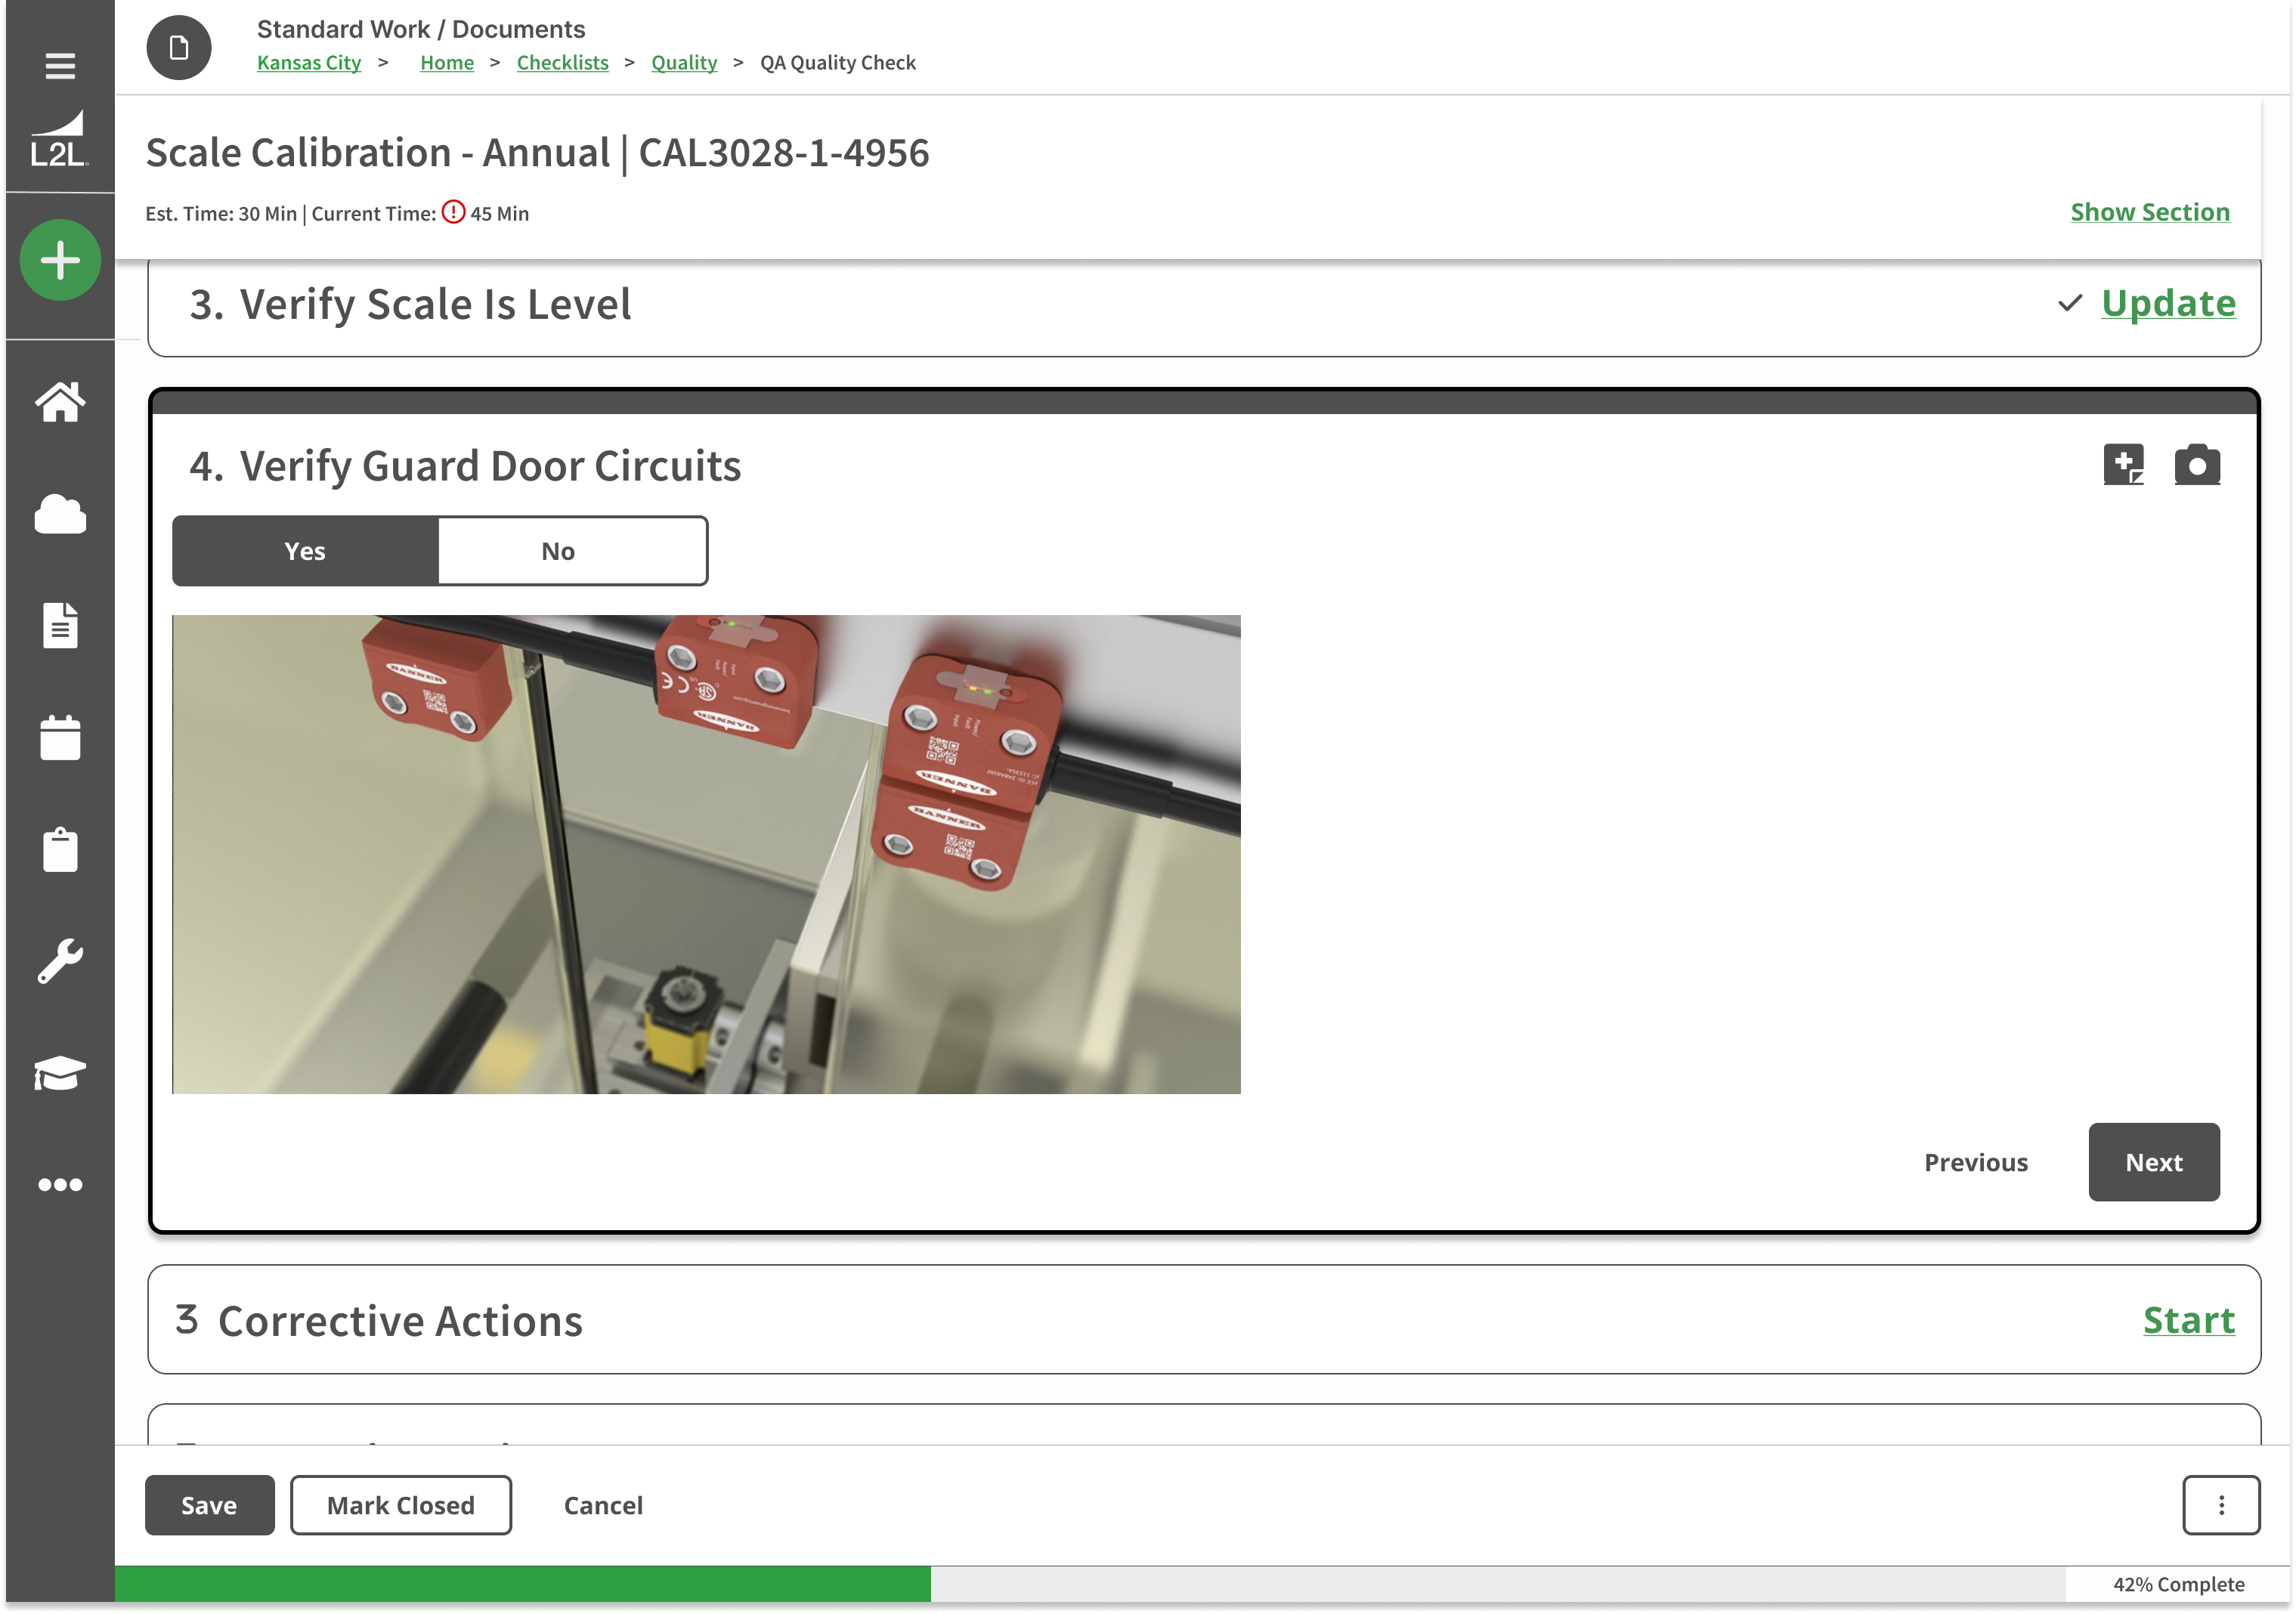 Screenshot of L2L displaying a quality assurance checklist